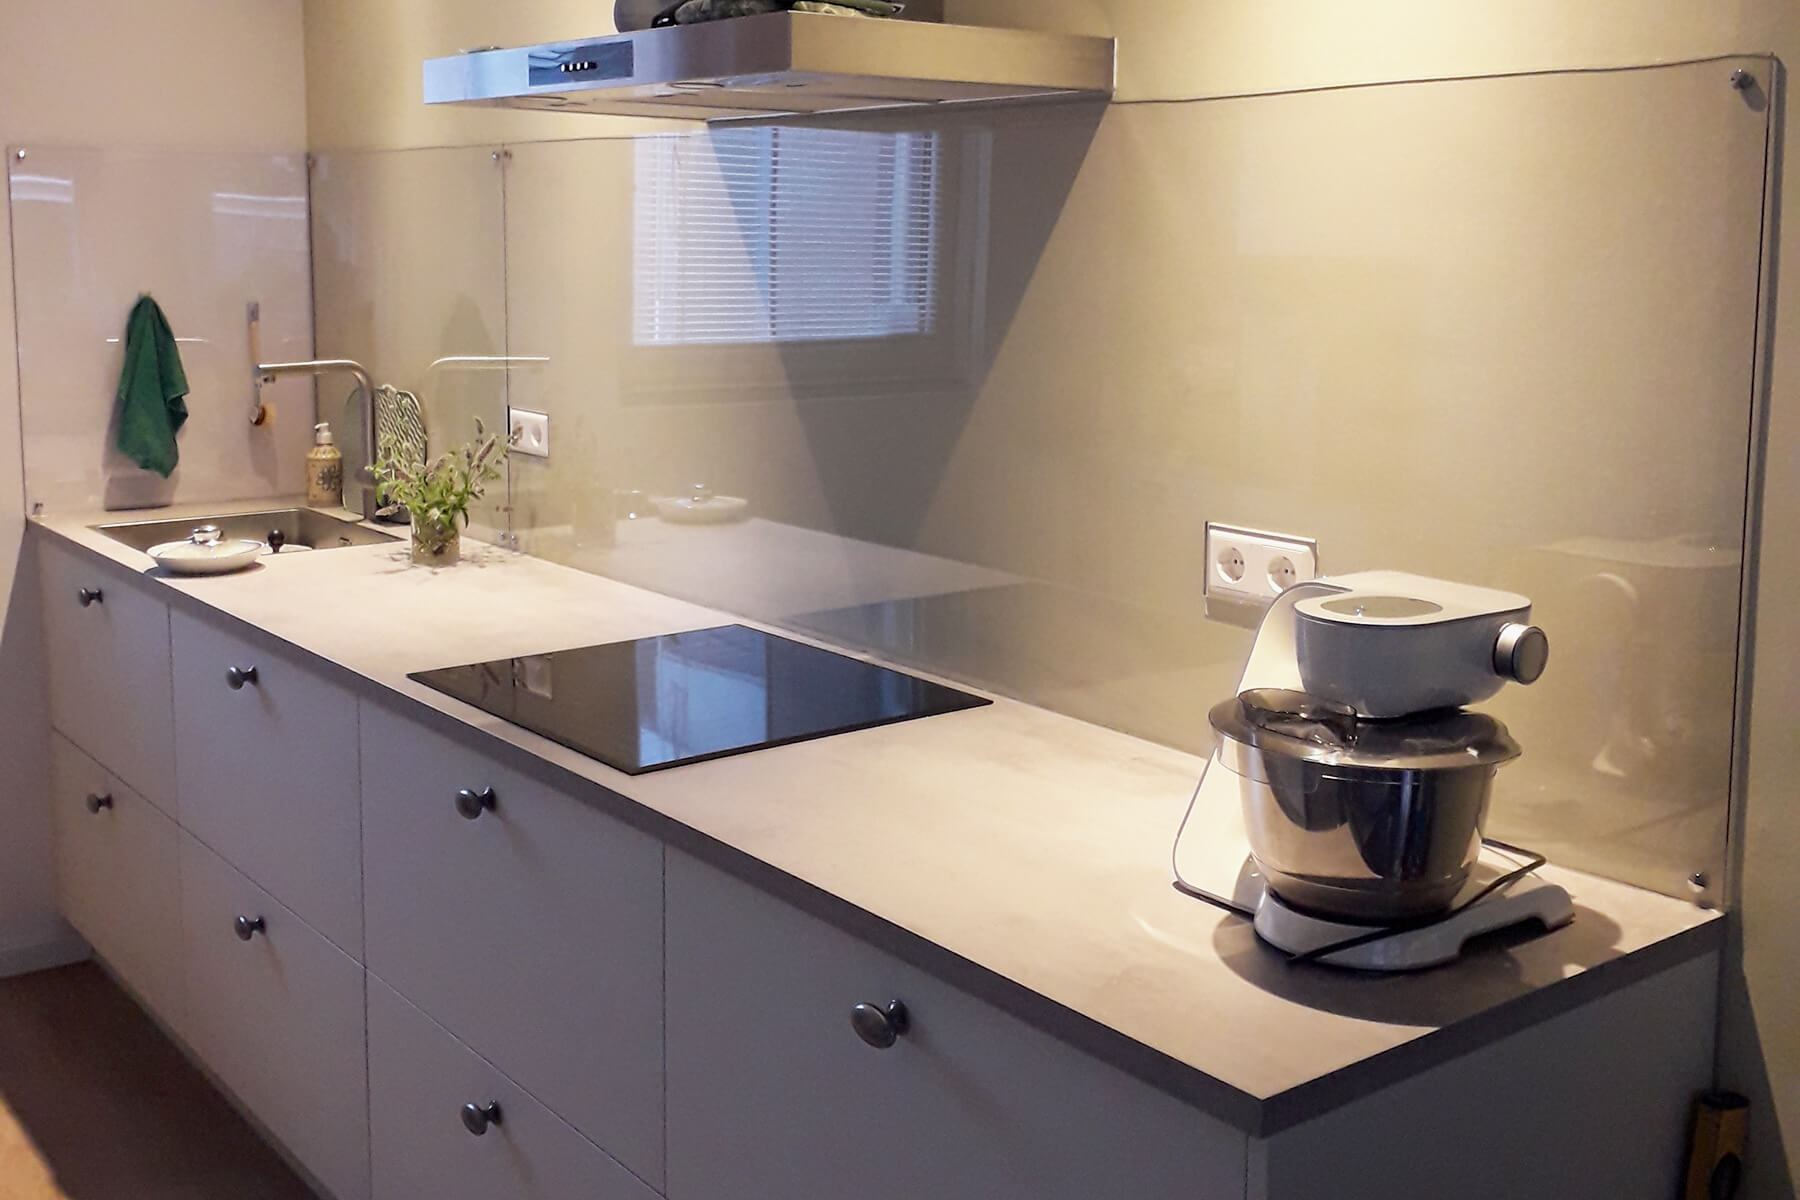 auditie de studie volwassen Plexiglas keukenwand | Plexiglas.nl